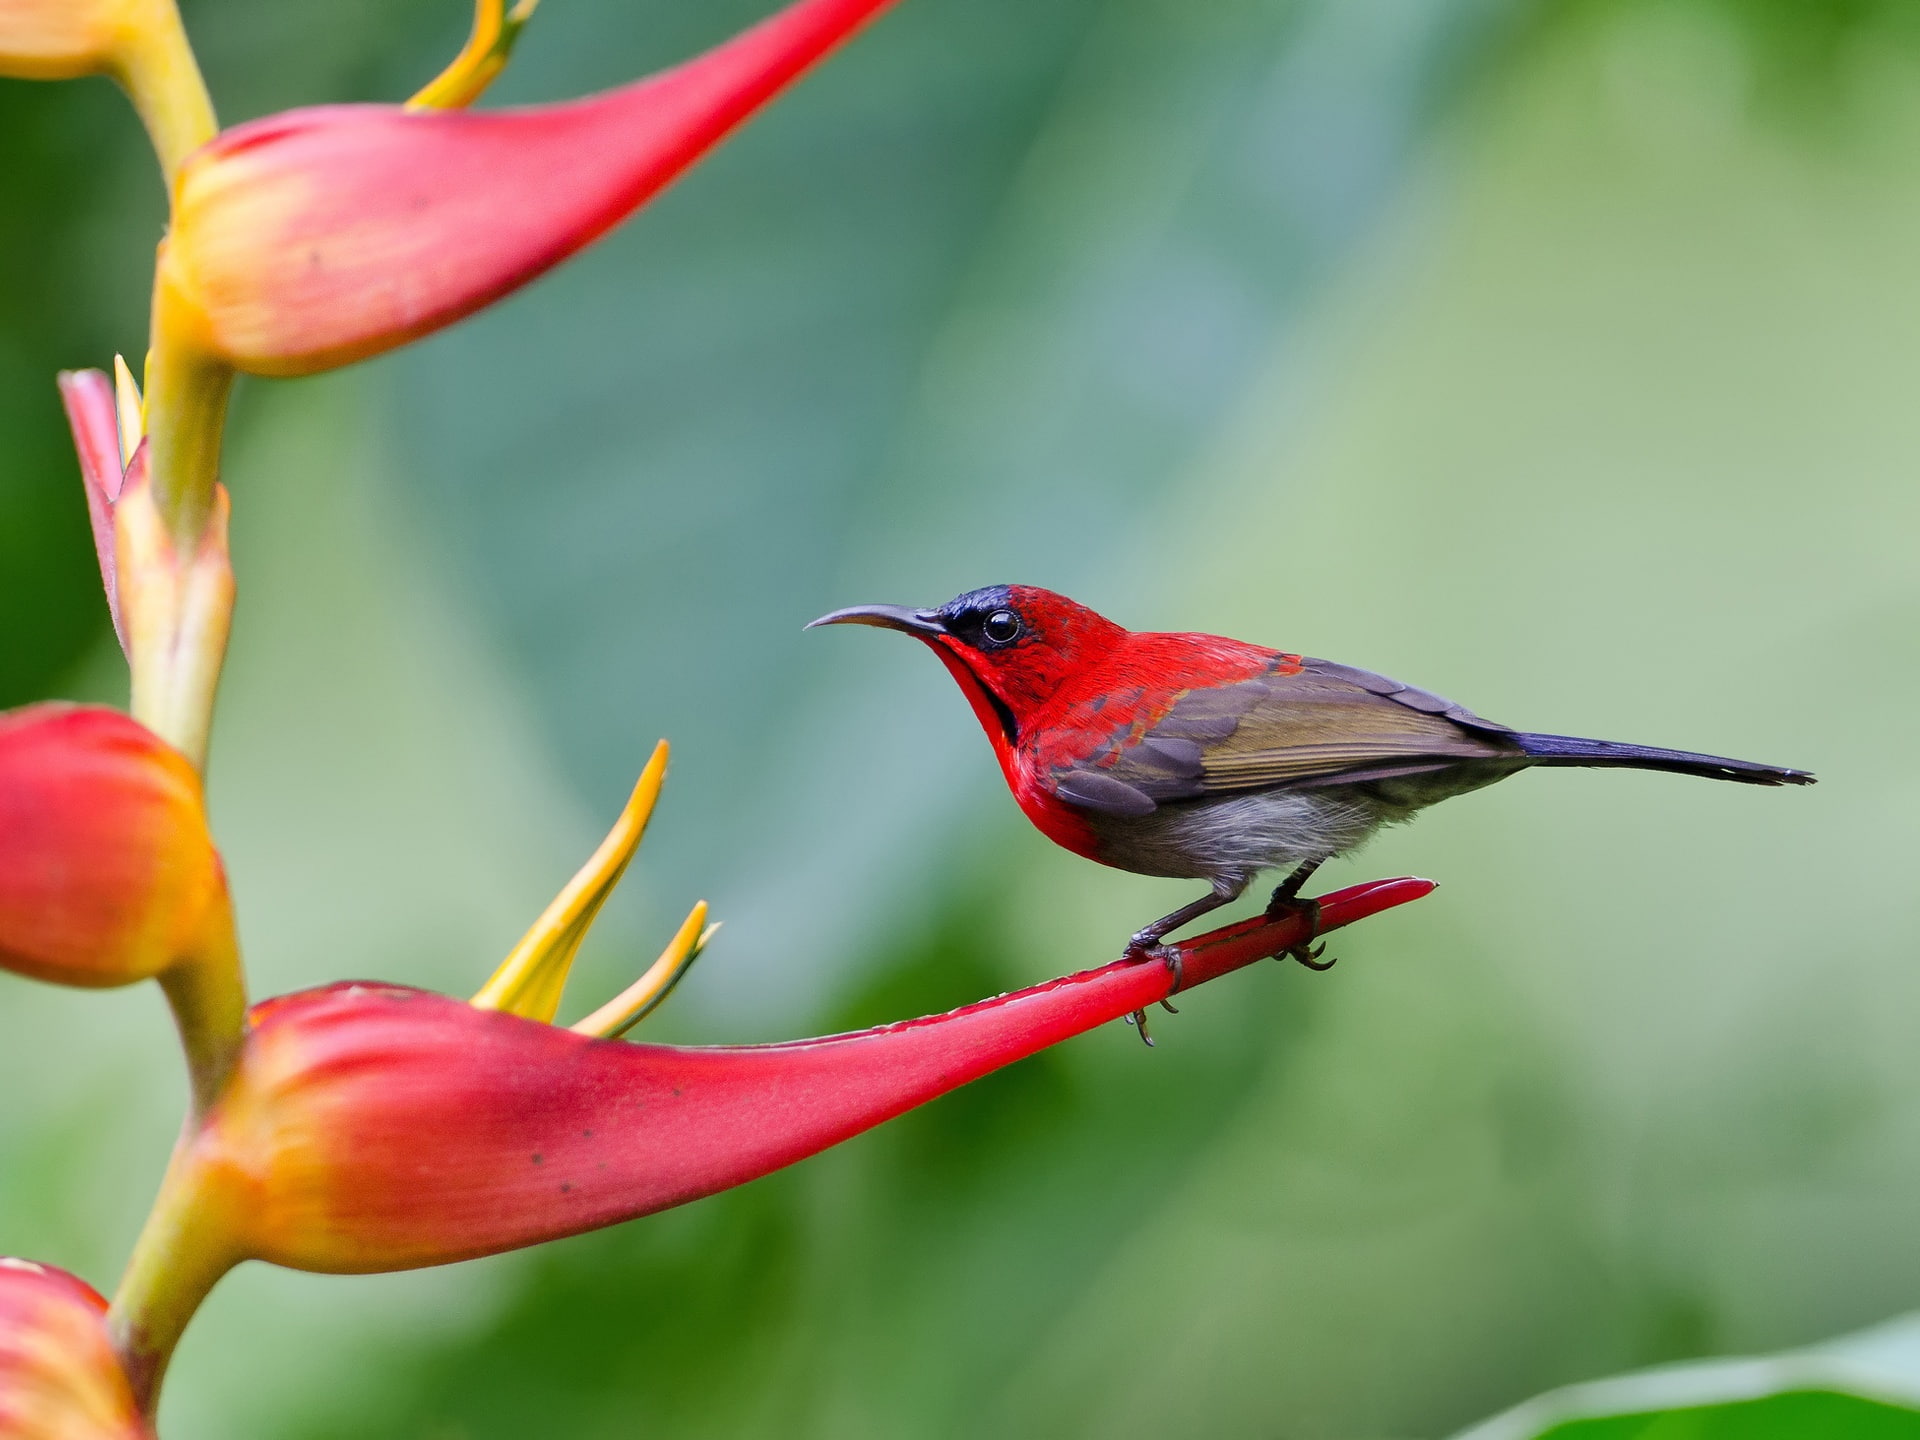 Sharp-tailed sunbird, flowers, blurred background